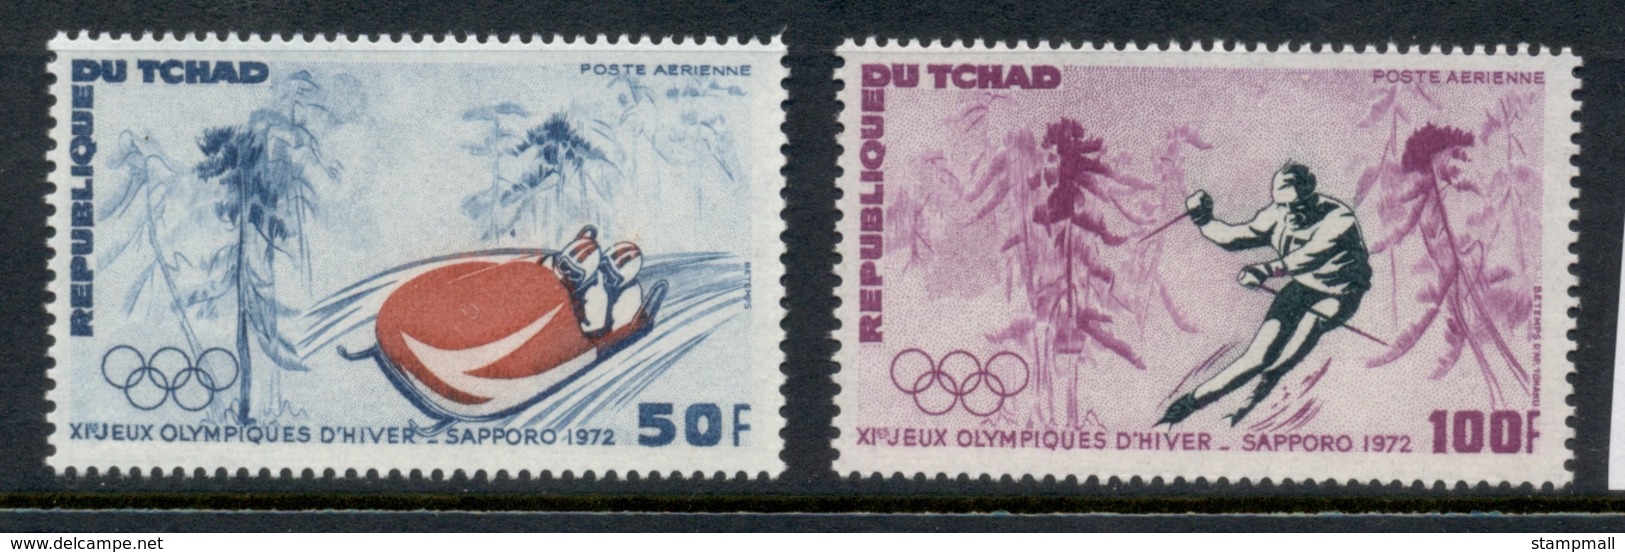 Chad 1972 Wnter Olympics Sapporo MUH - Chad (1960-...)